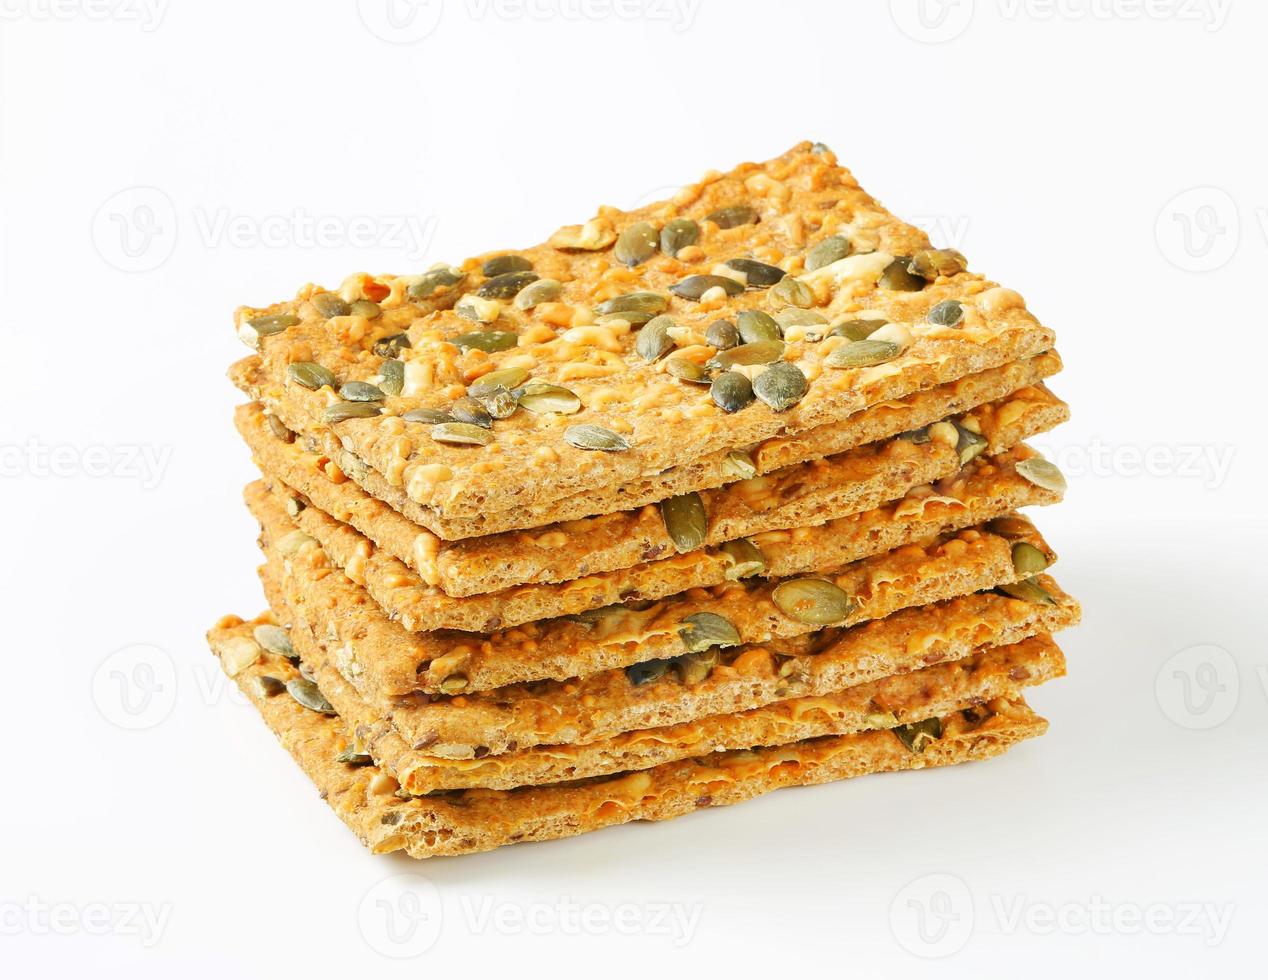 pompoenzaad cheddar crackers foto